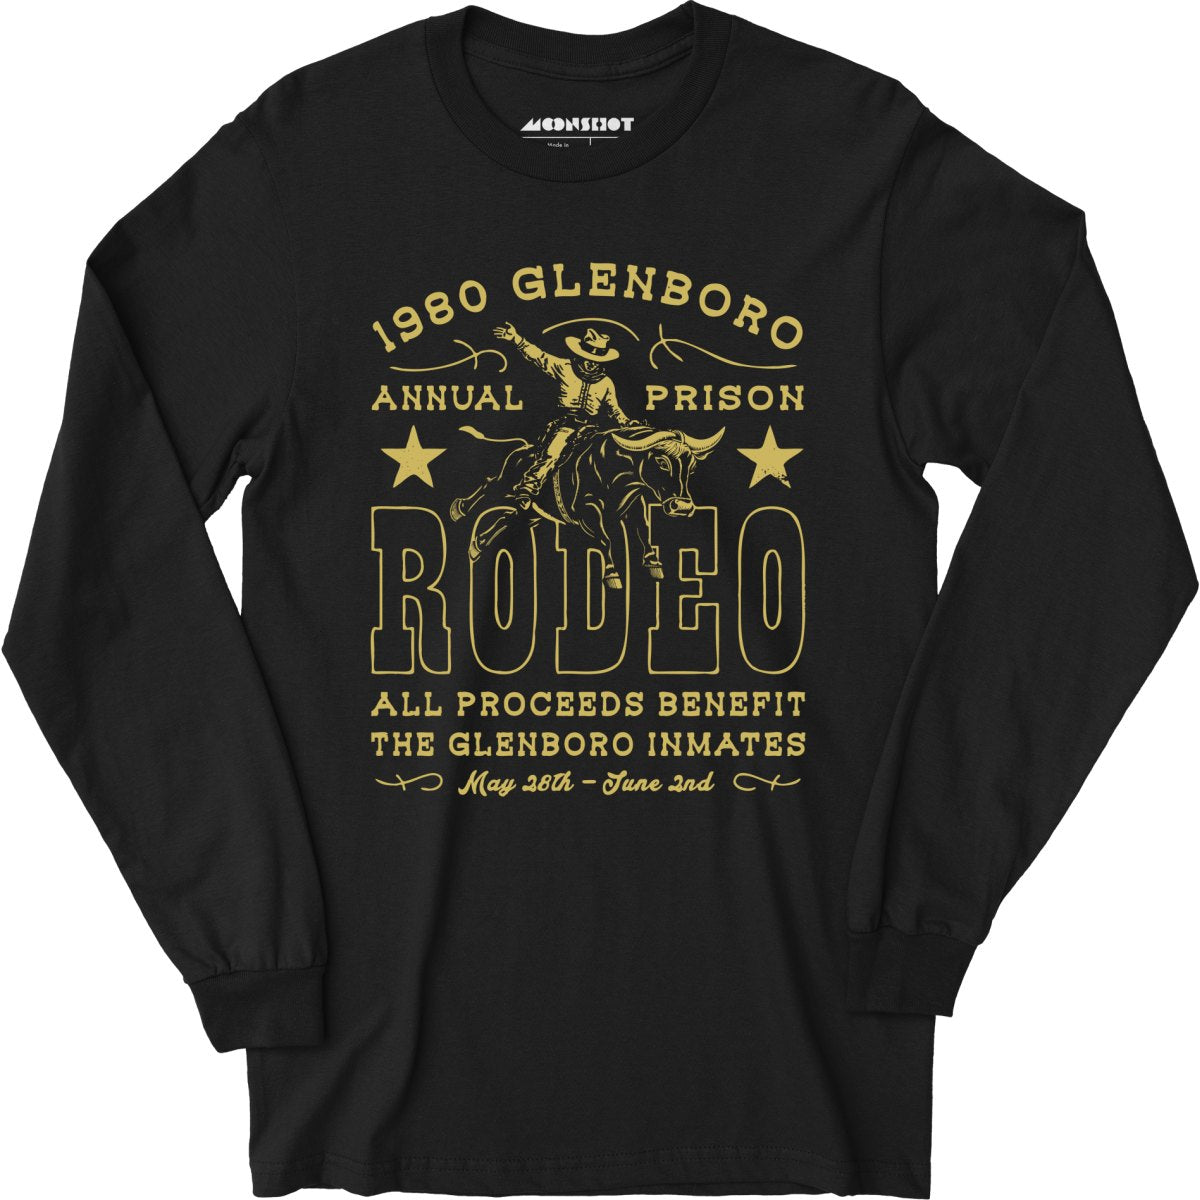 1980 Glenboro Annual Prison Rodeo - Long Sleeve T-Shirt